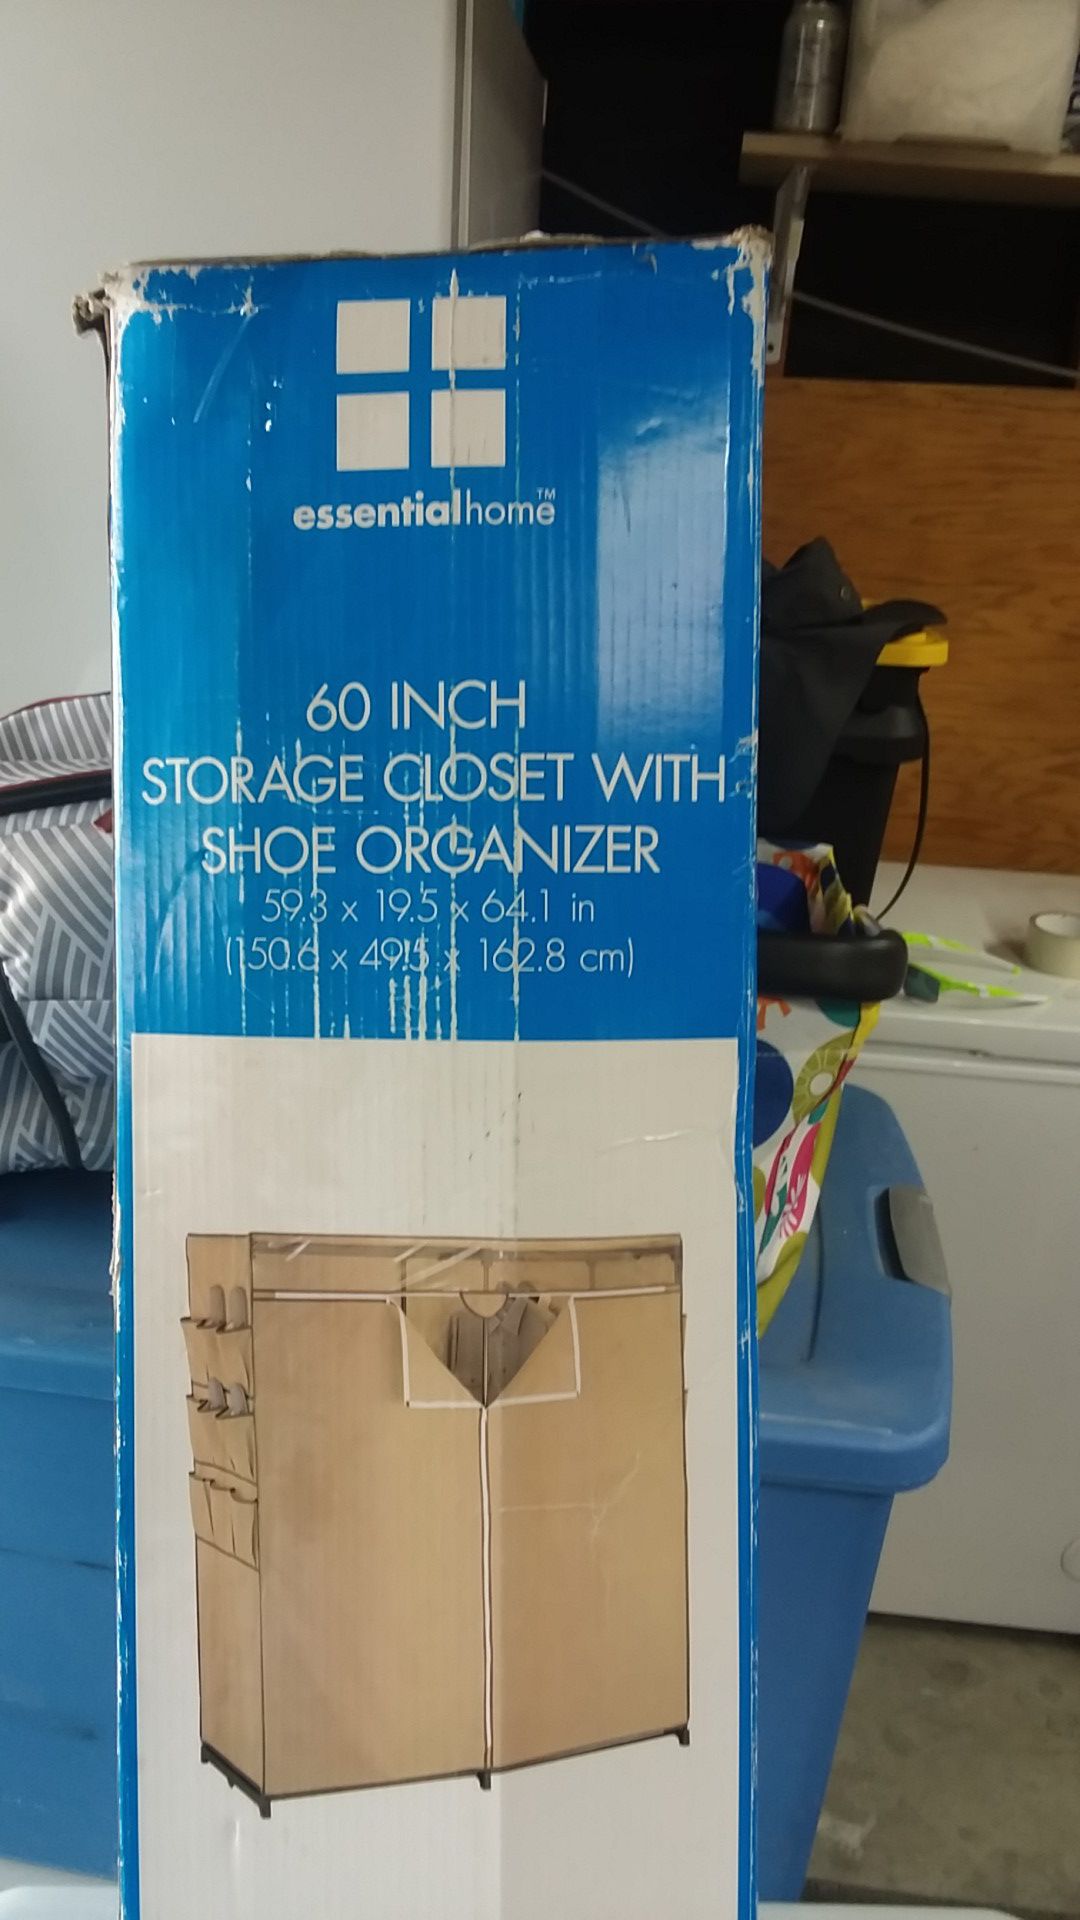 60 inch storage closet with shoe organizer